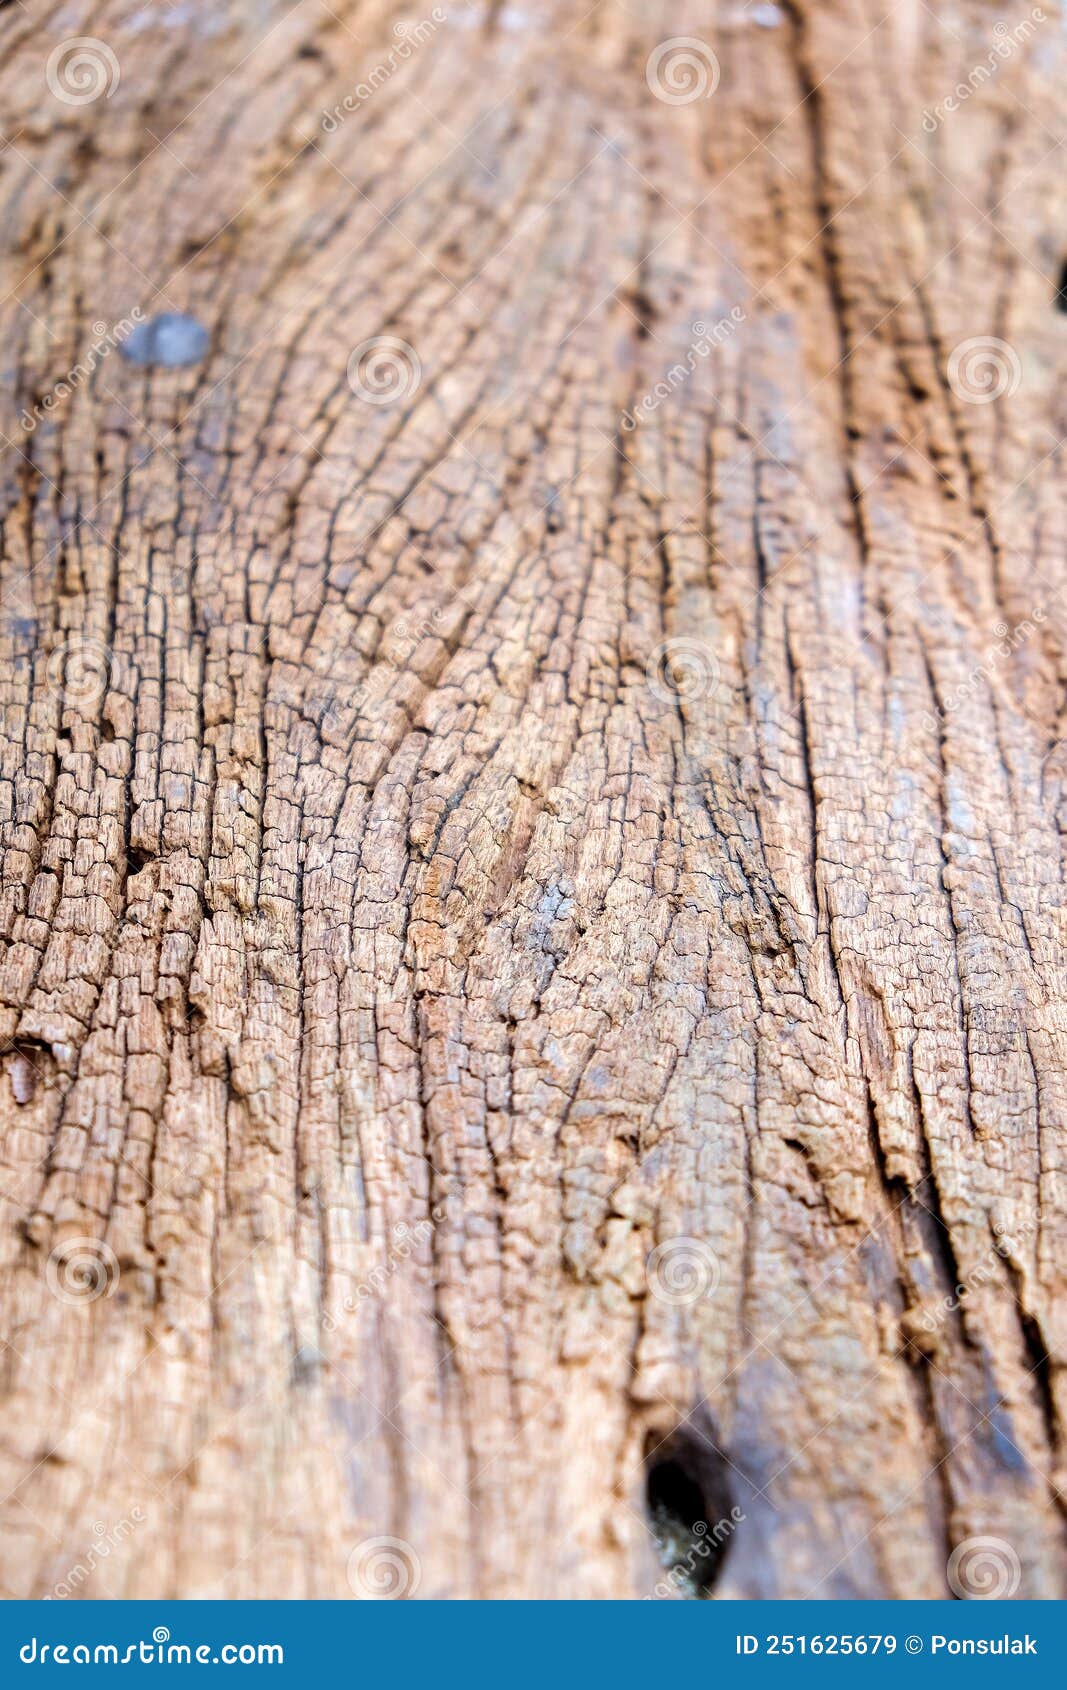 termites devour timber